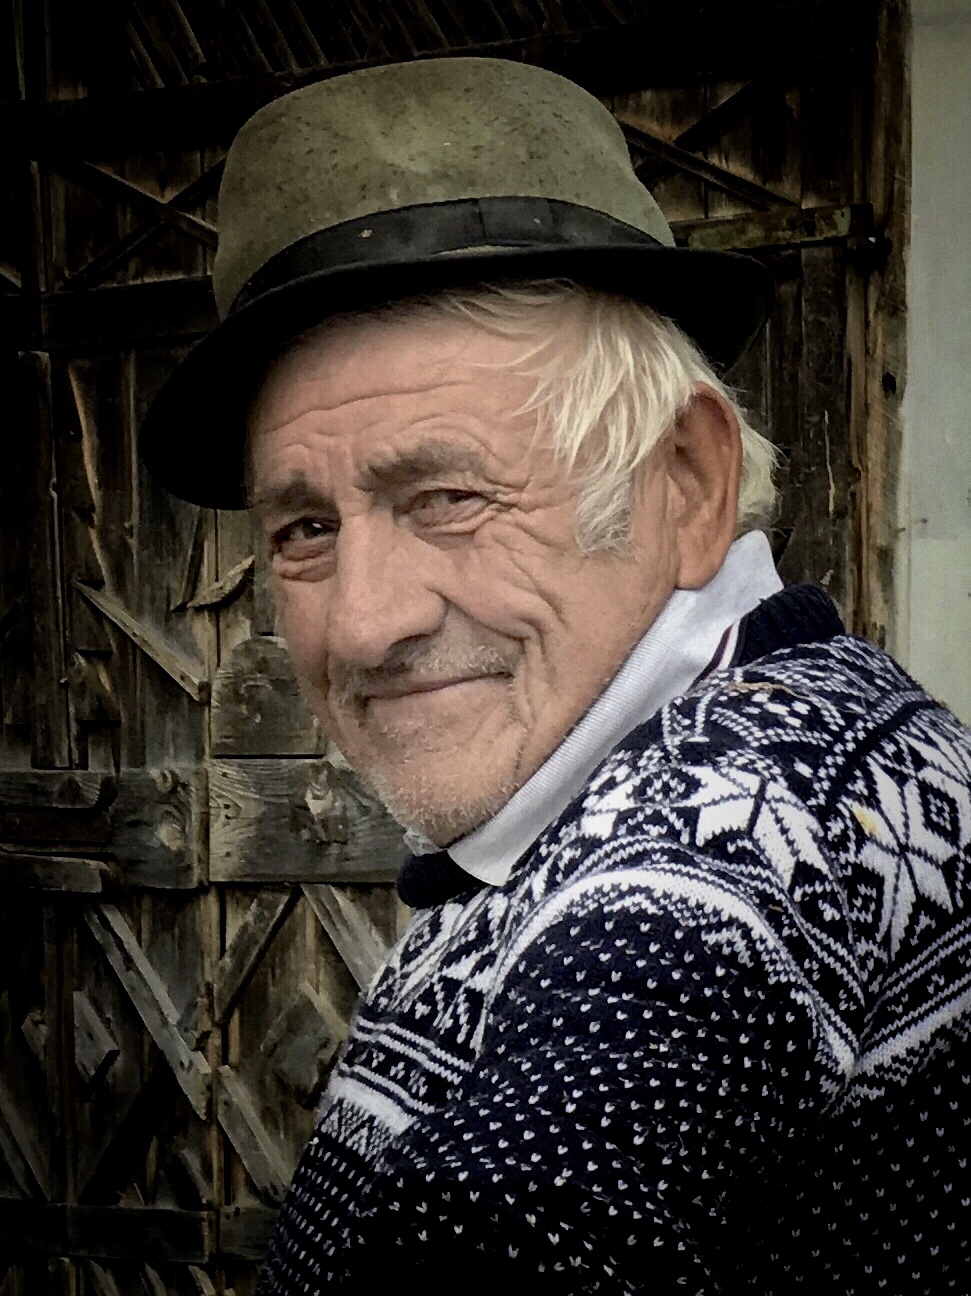 Gospodar Timotei Filip, Cupseni, Romania, portrait by Malin Skinnar